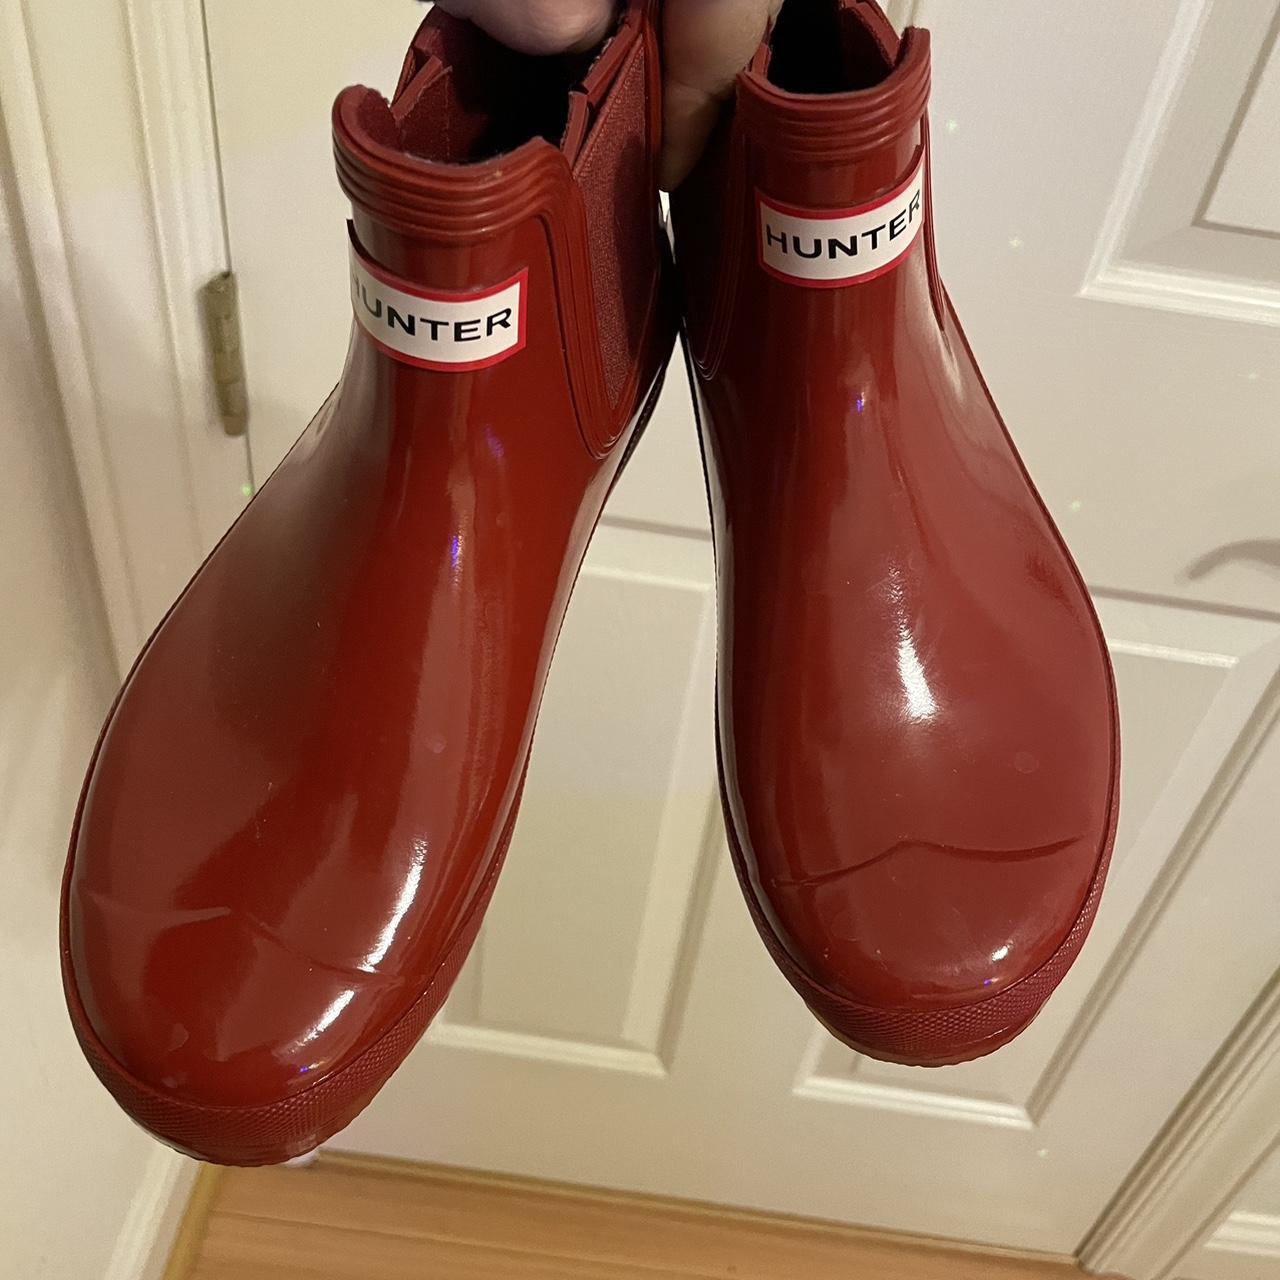 Hunter Women's Red Boots